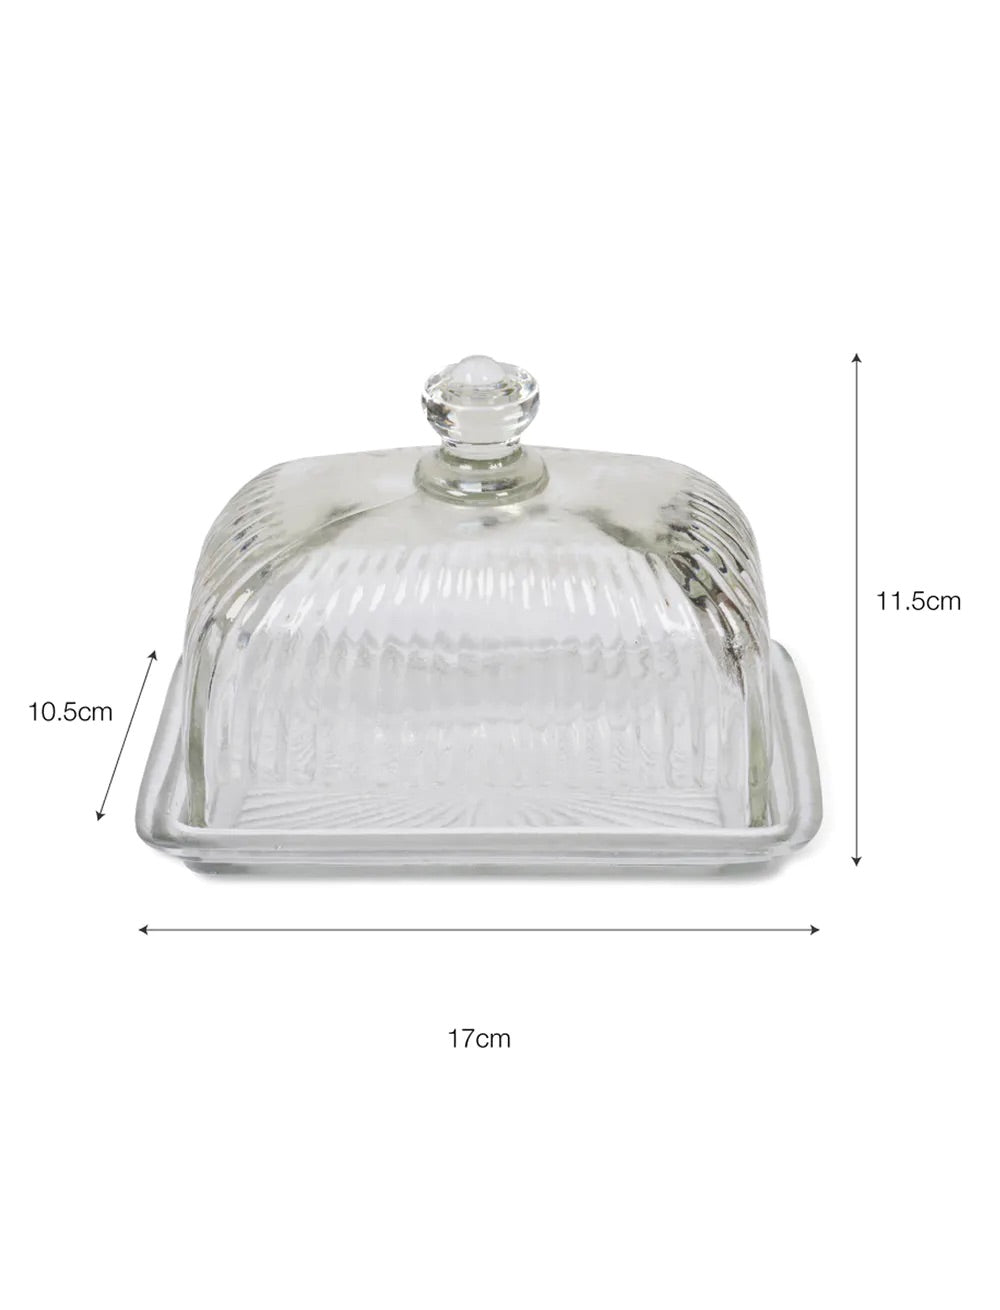 Bloombury Classic Glass Butter Dish Measurements - Mrs Robinson